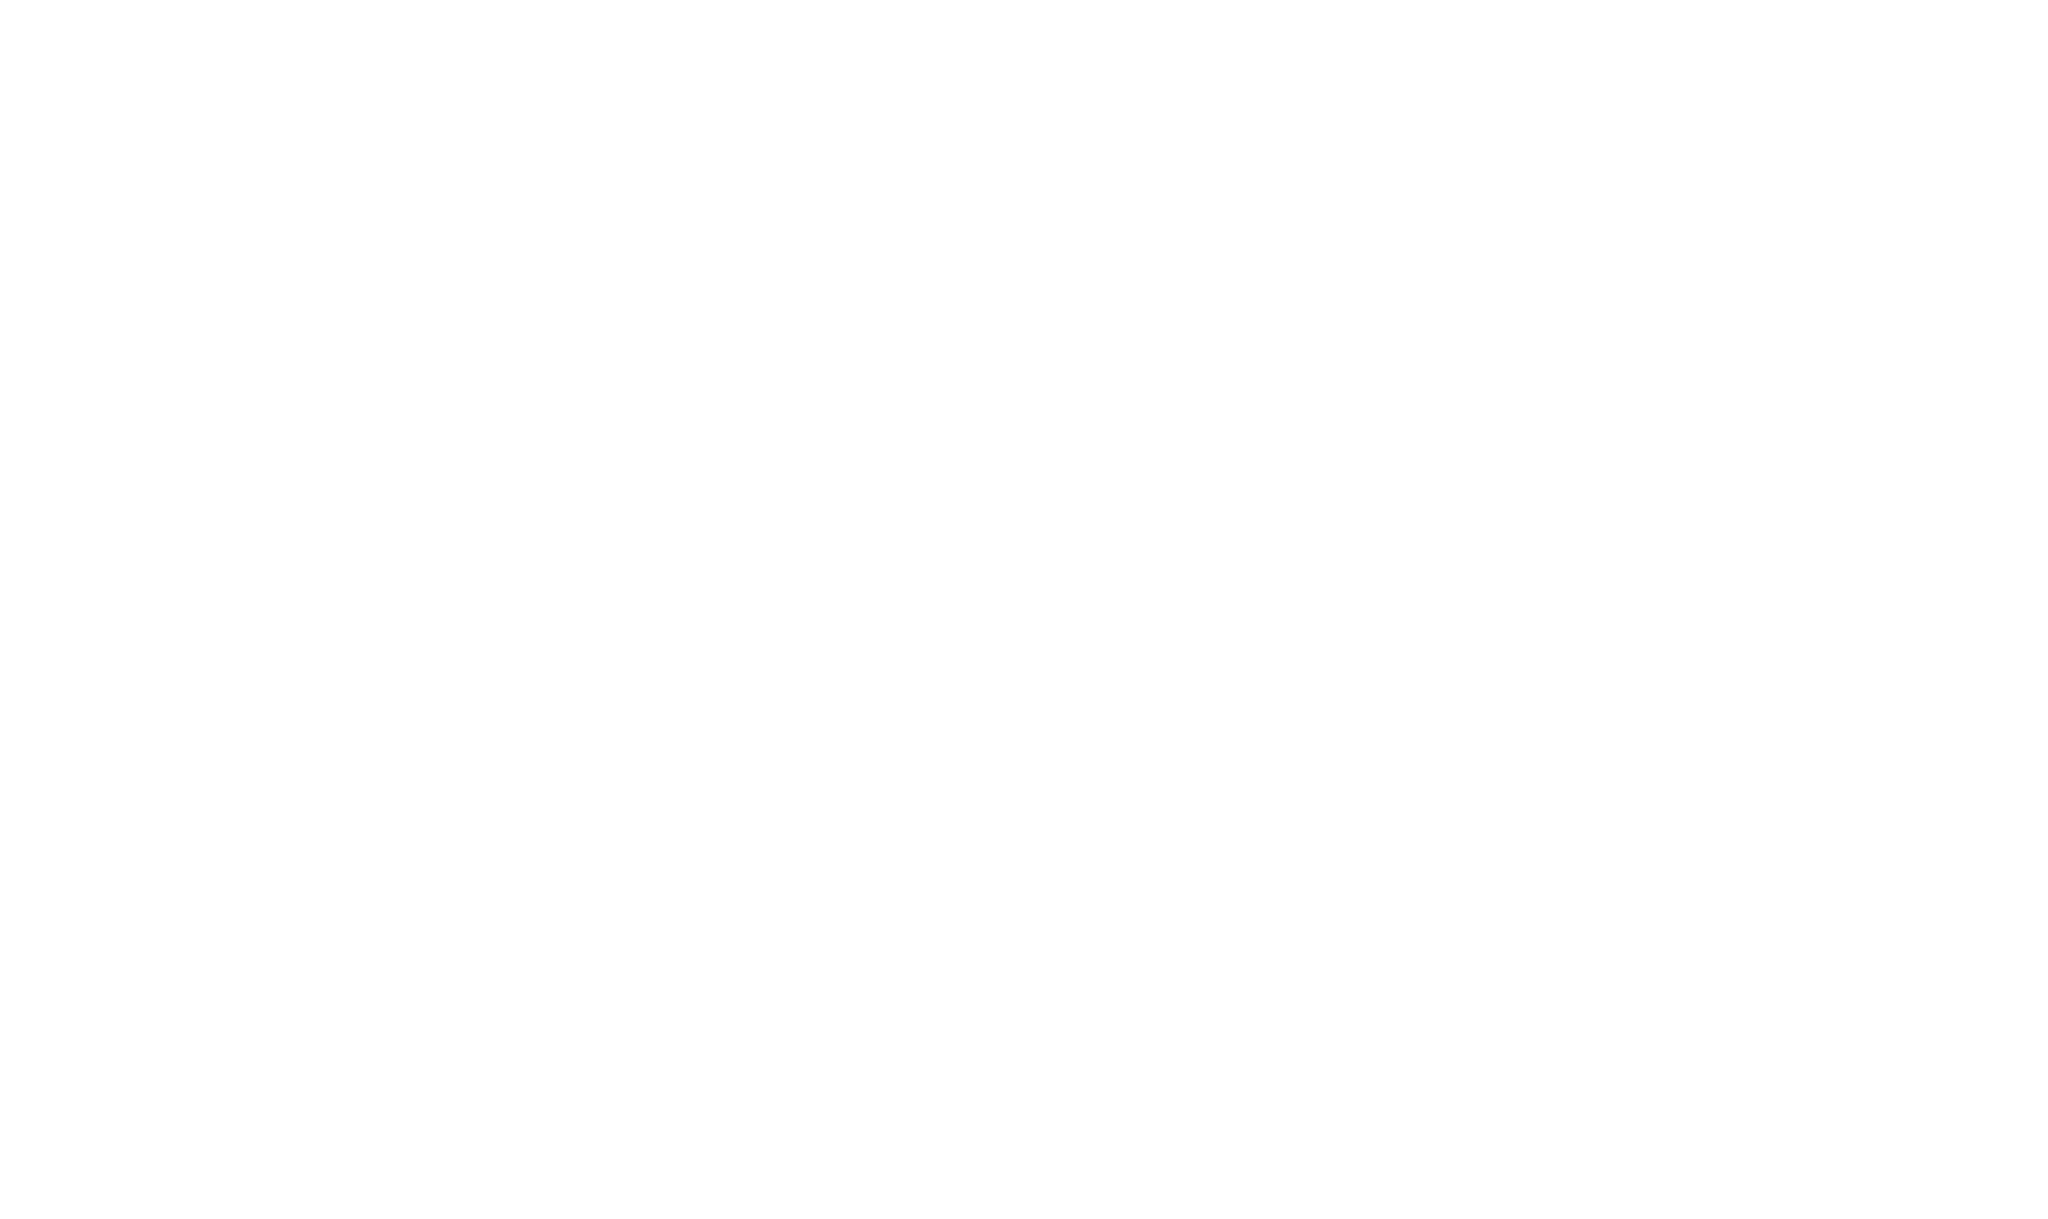 woocommerce icon